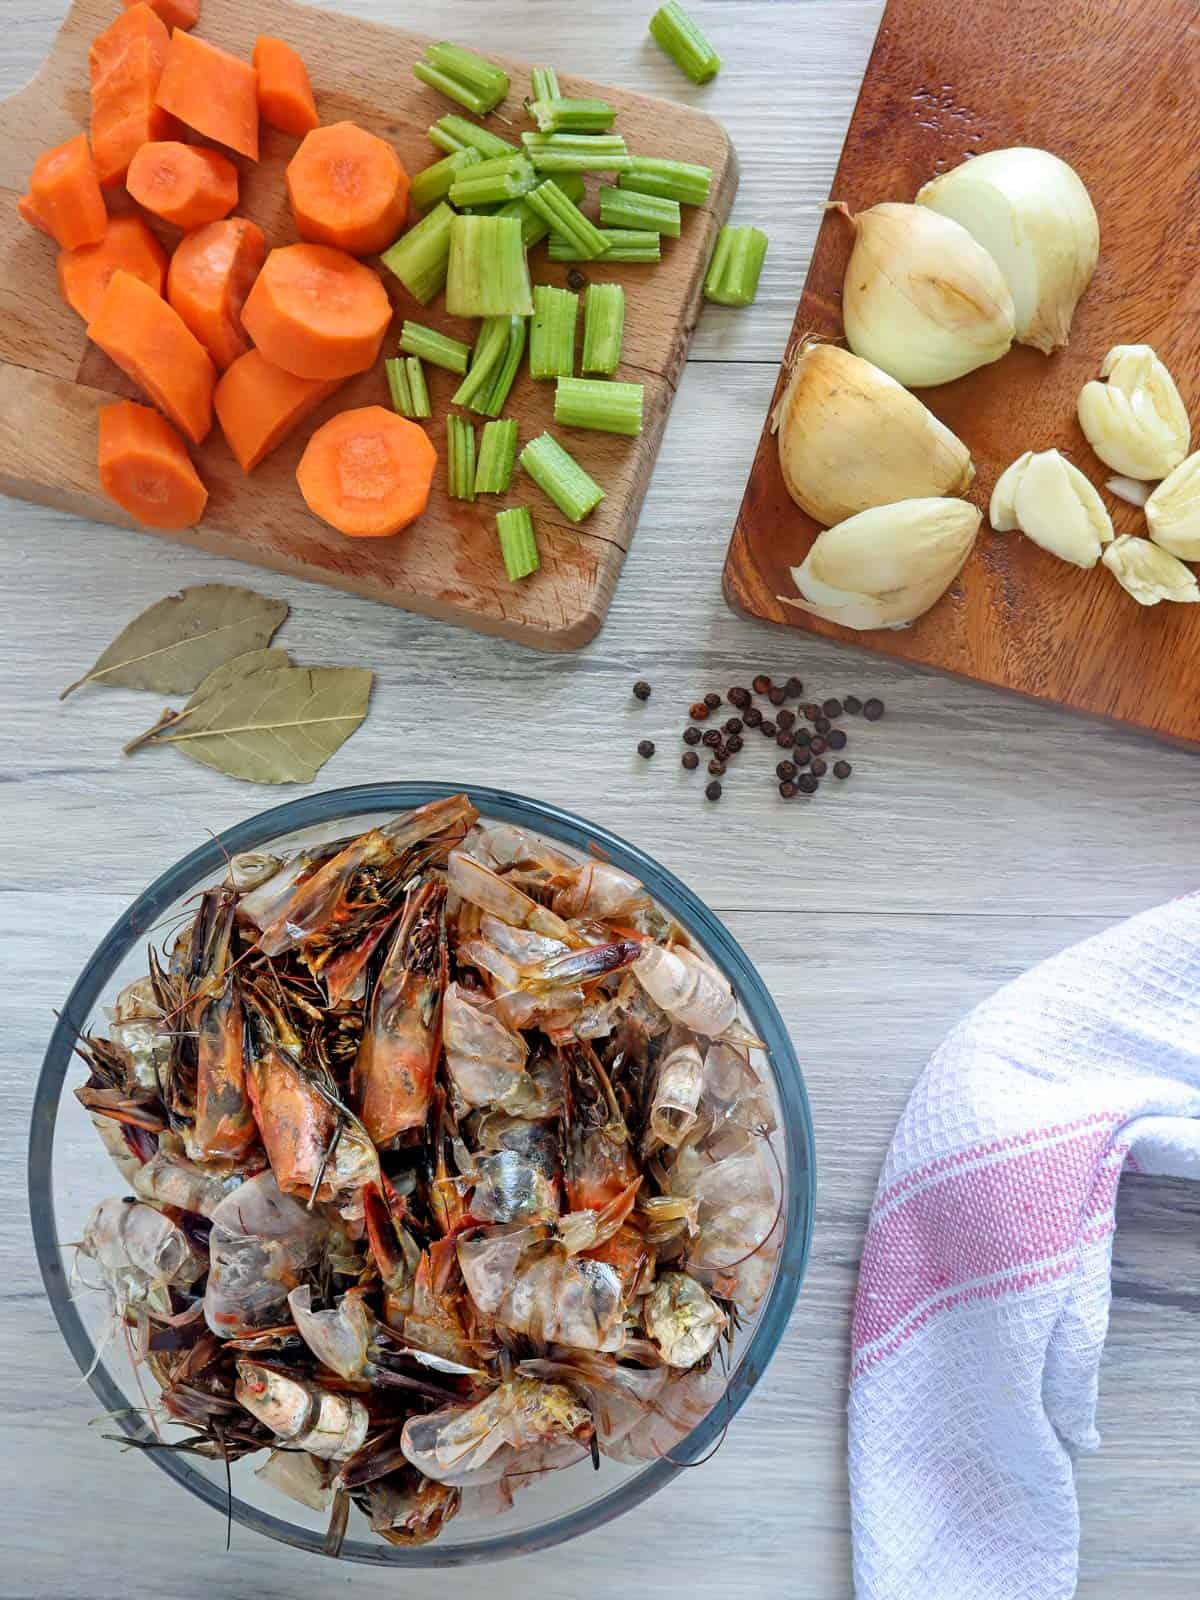 Homemade Shellfish Stock Recipe made with empty seafood shells